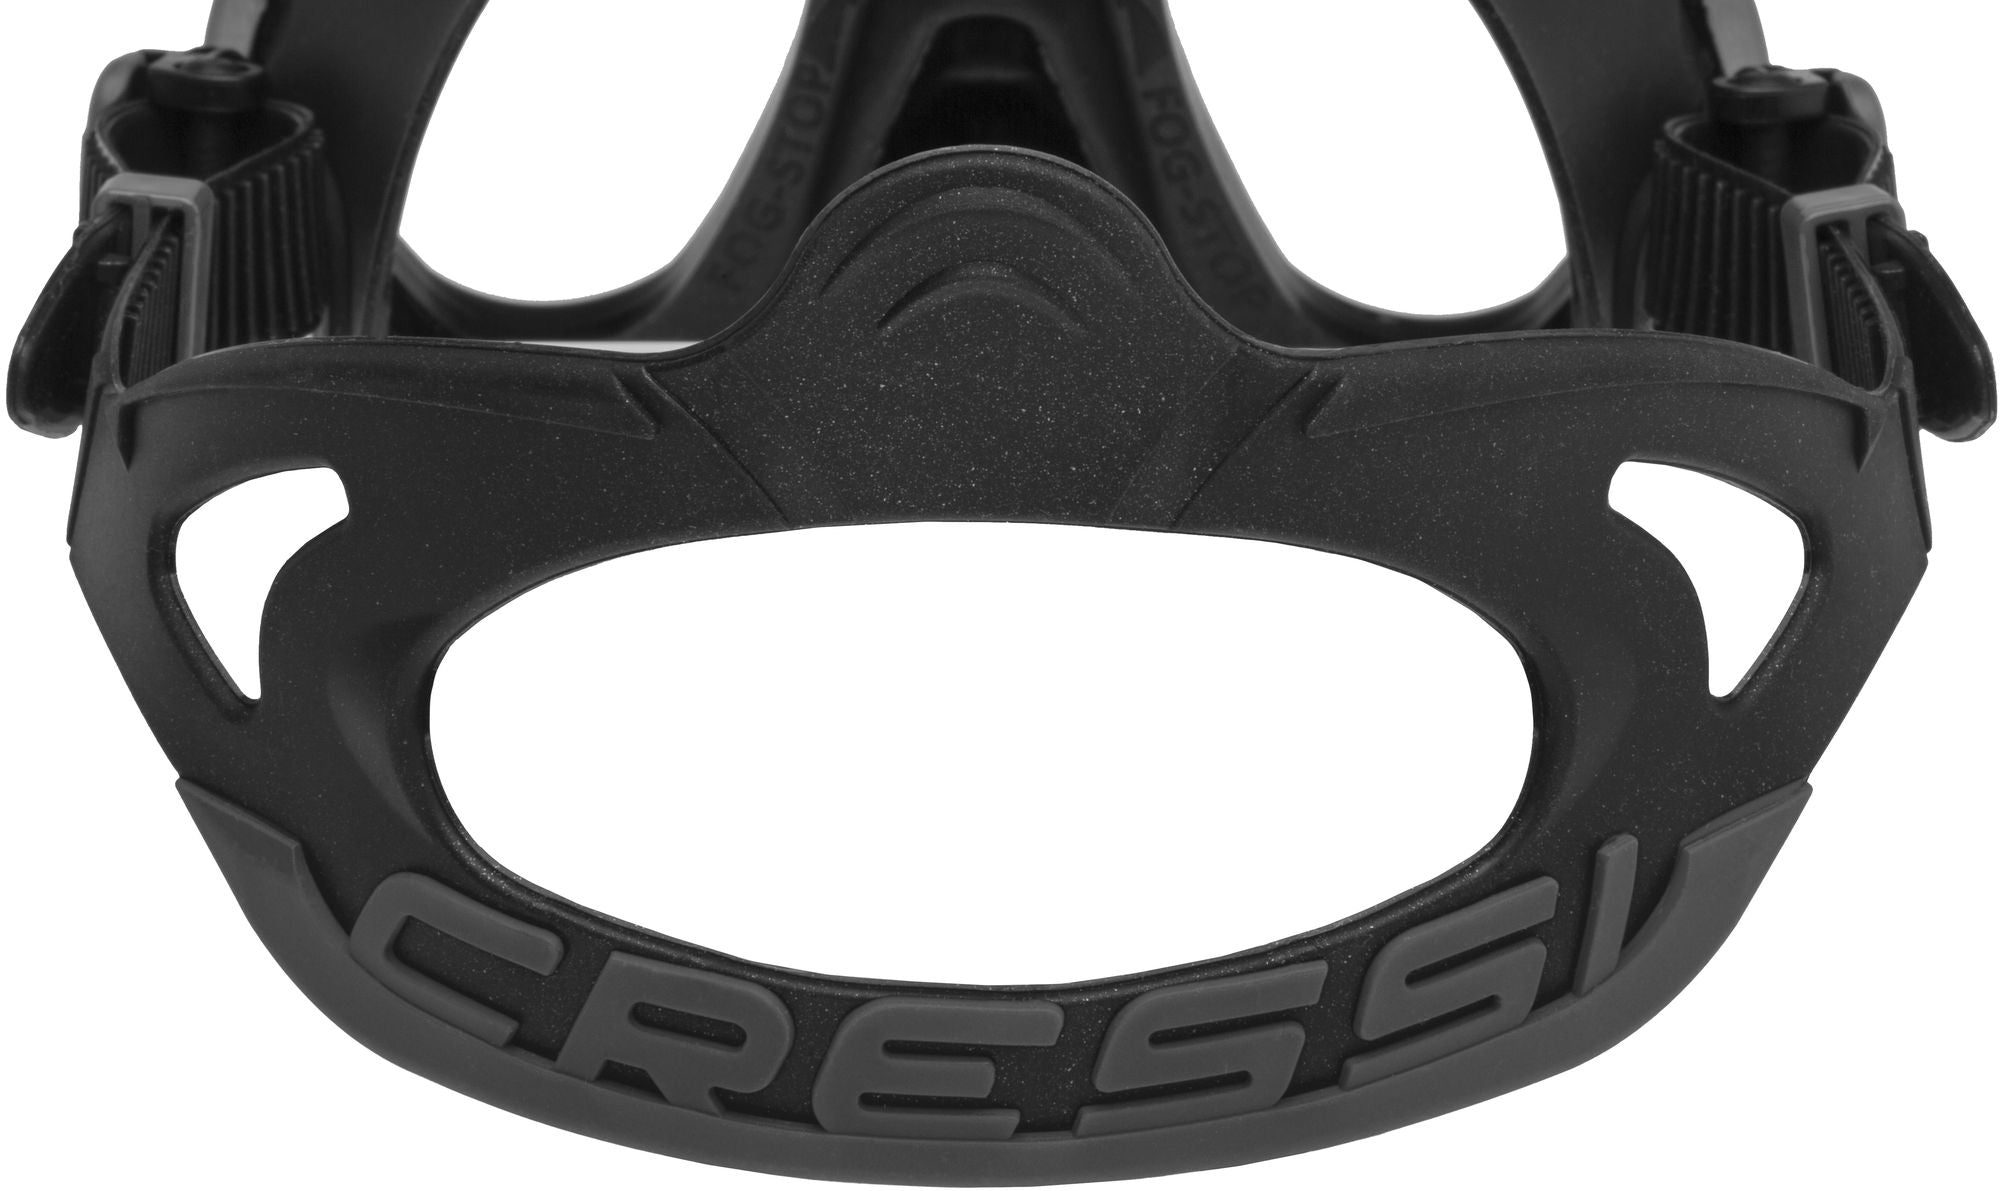 Atom Mask - Scuba mask, Freediving mask, Snorkeling mask